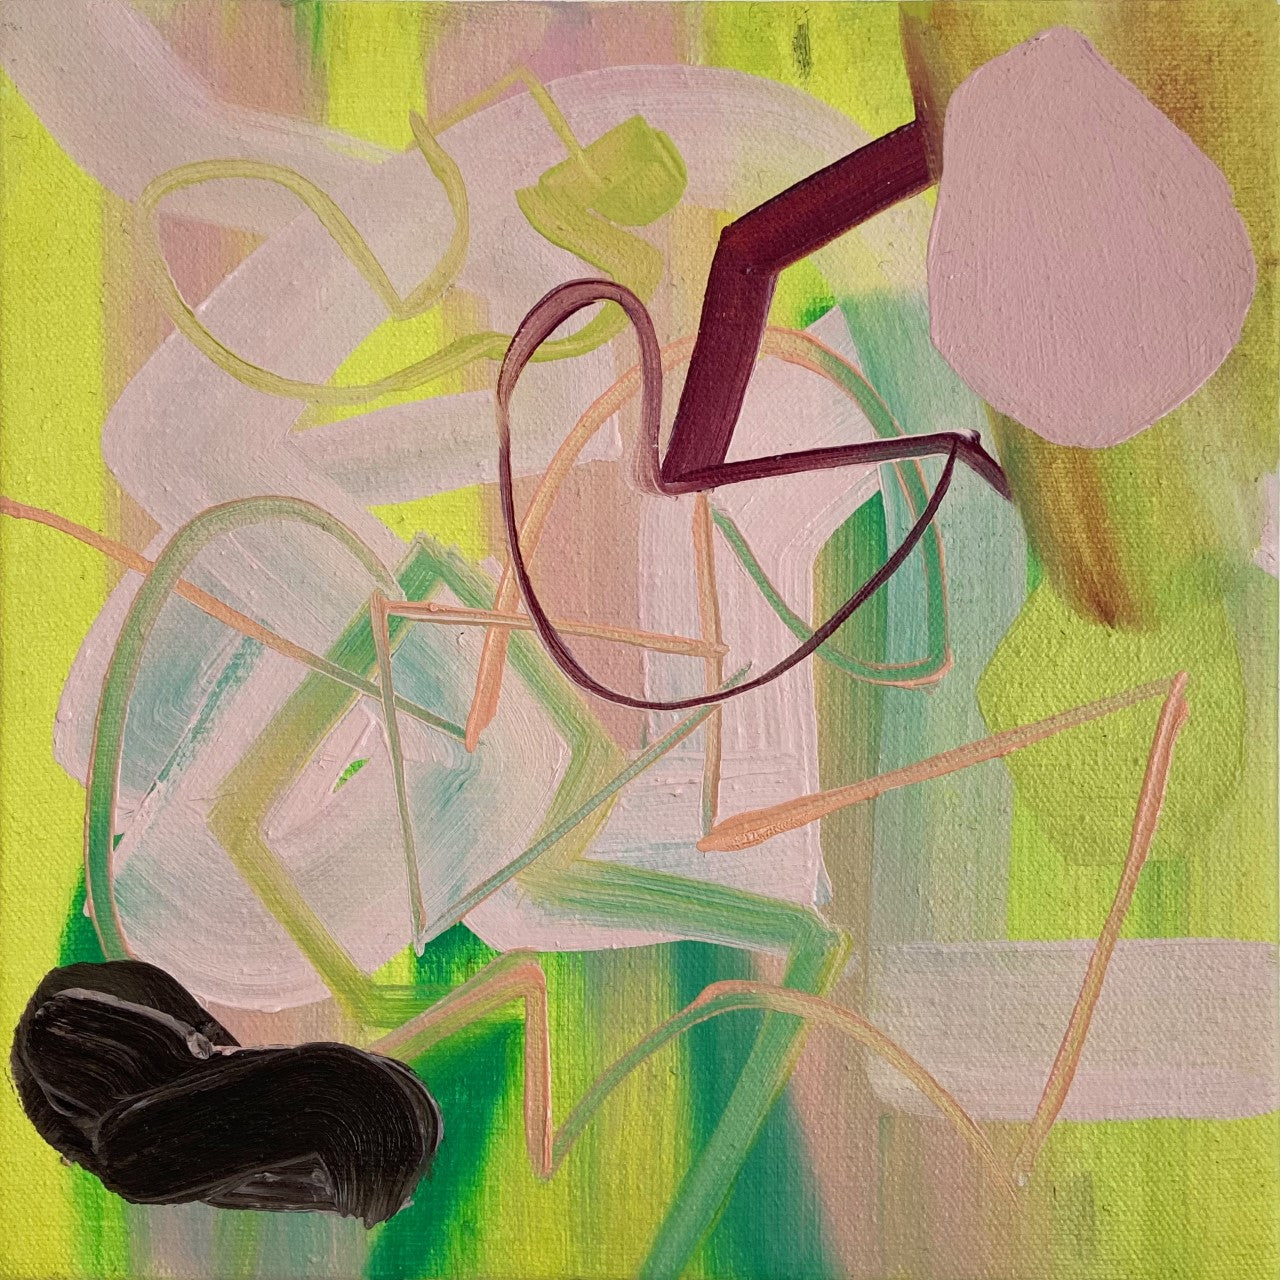 Jennifer Lefort, Soft & Neon (traces series), 2012